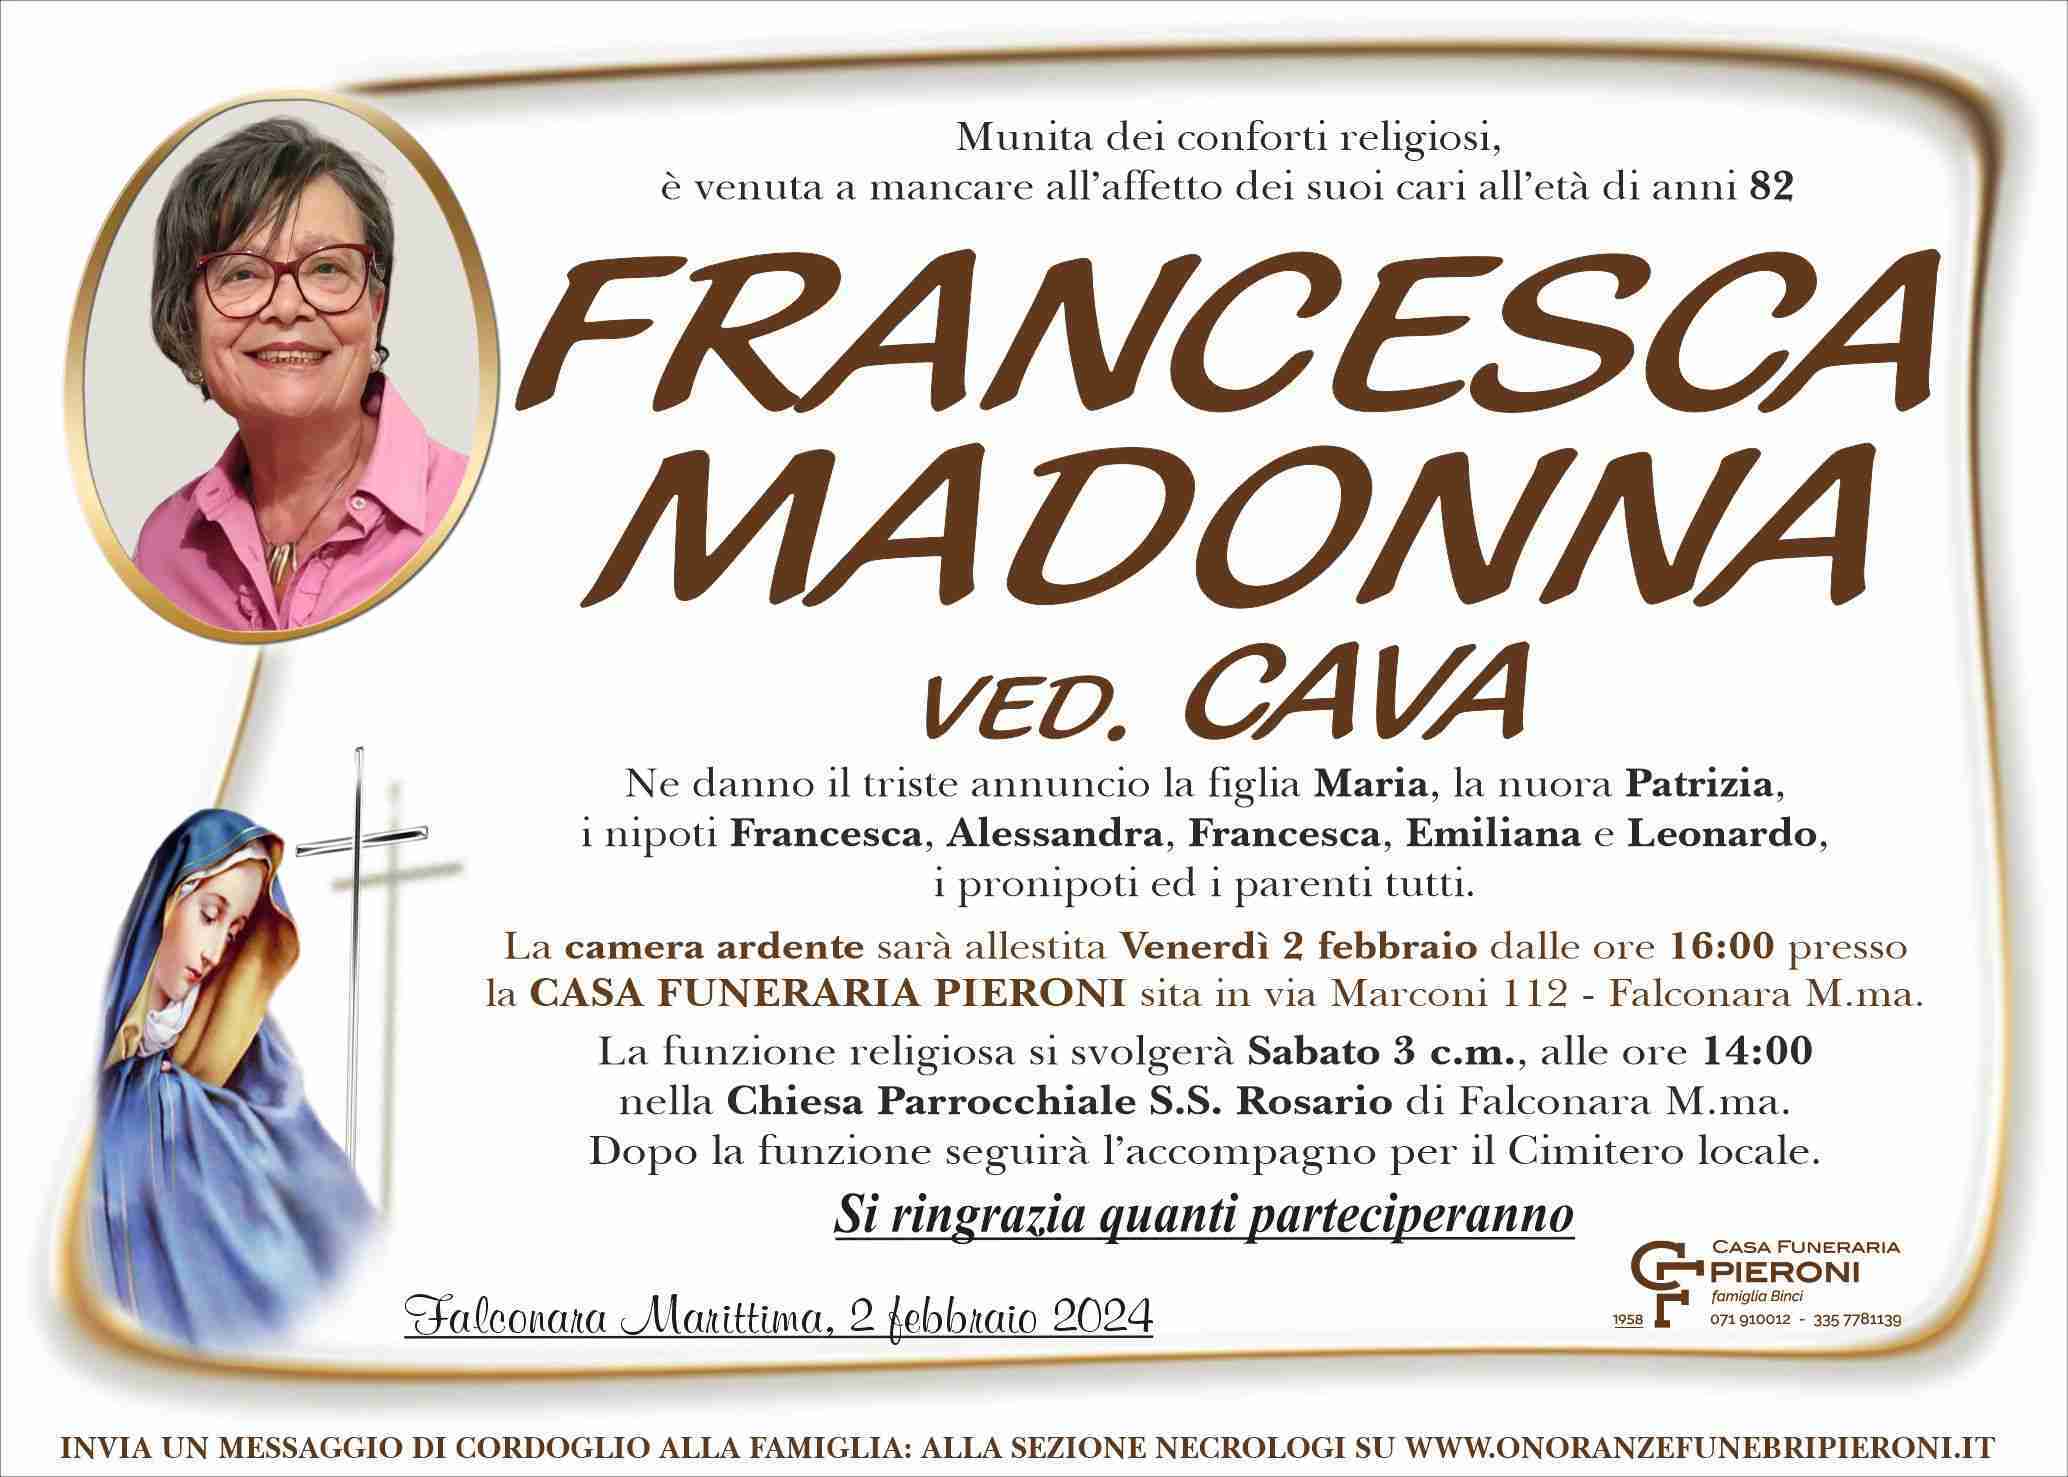 Francesca Madonna